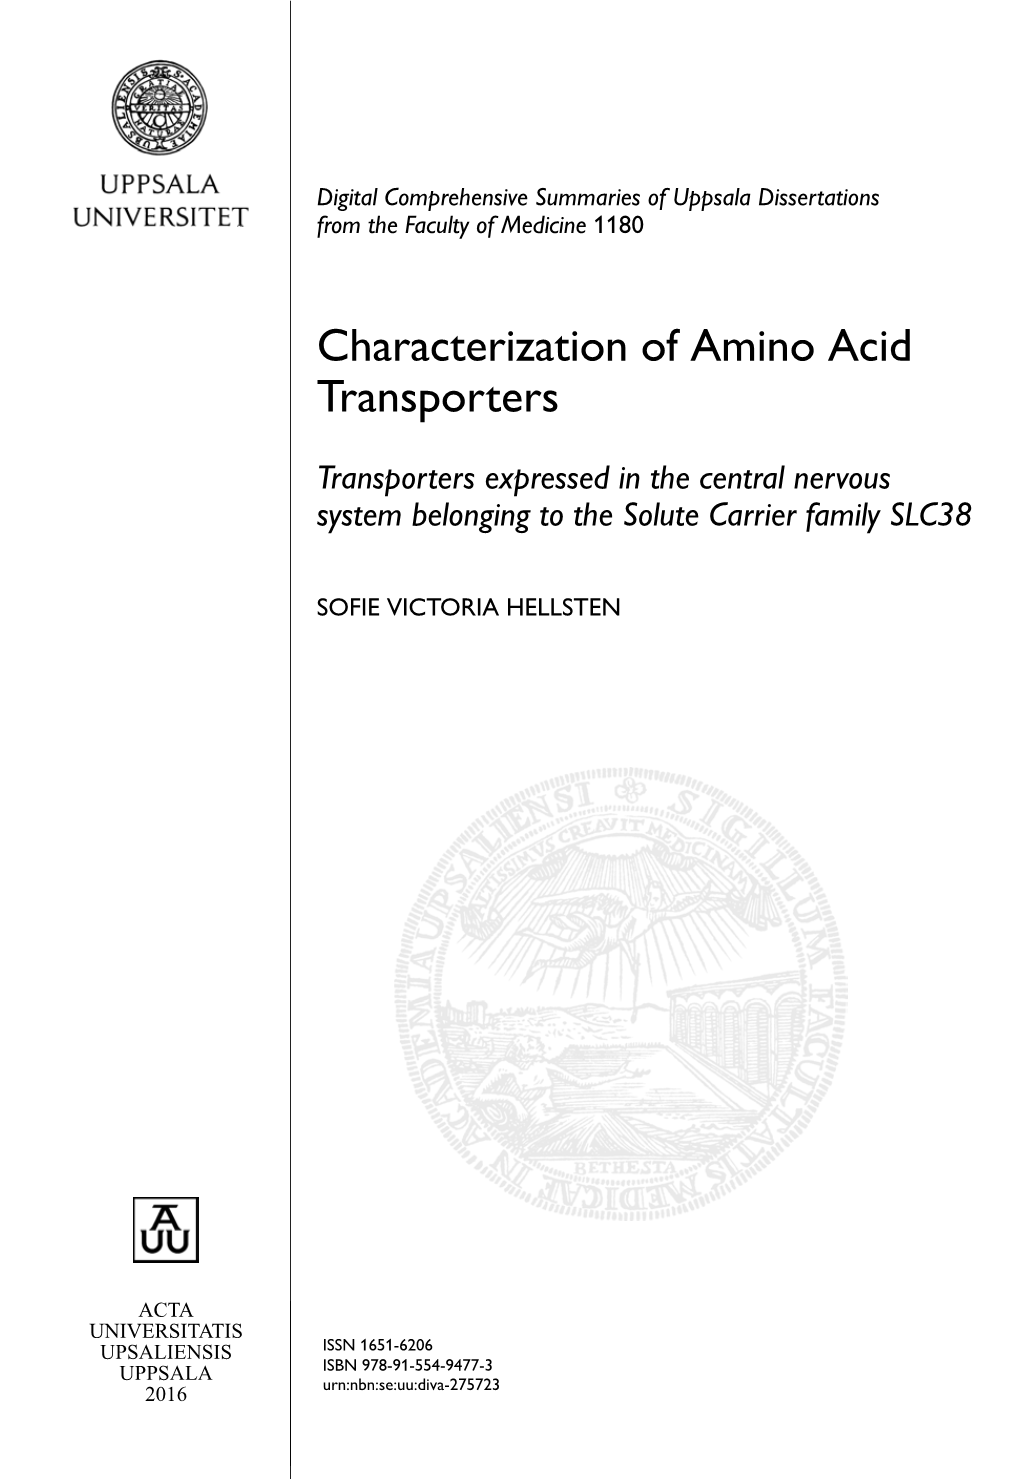 Characterization of Amino Acid Transporters